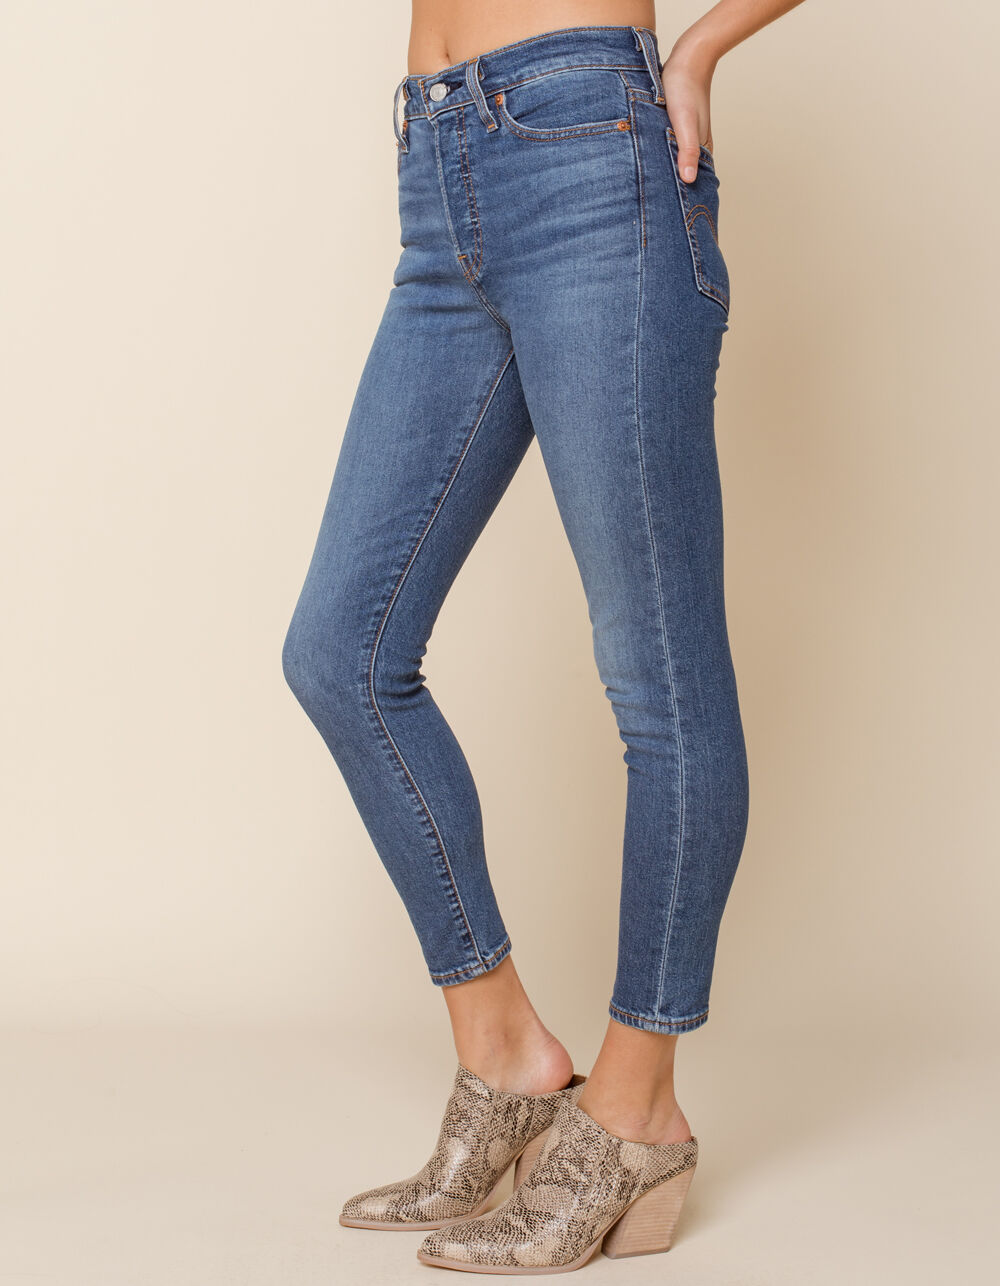 LEVI'S Wedgie High Waist Womens Skinny Jeans - MEDIUM WASH | Tillys